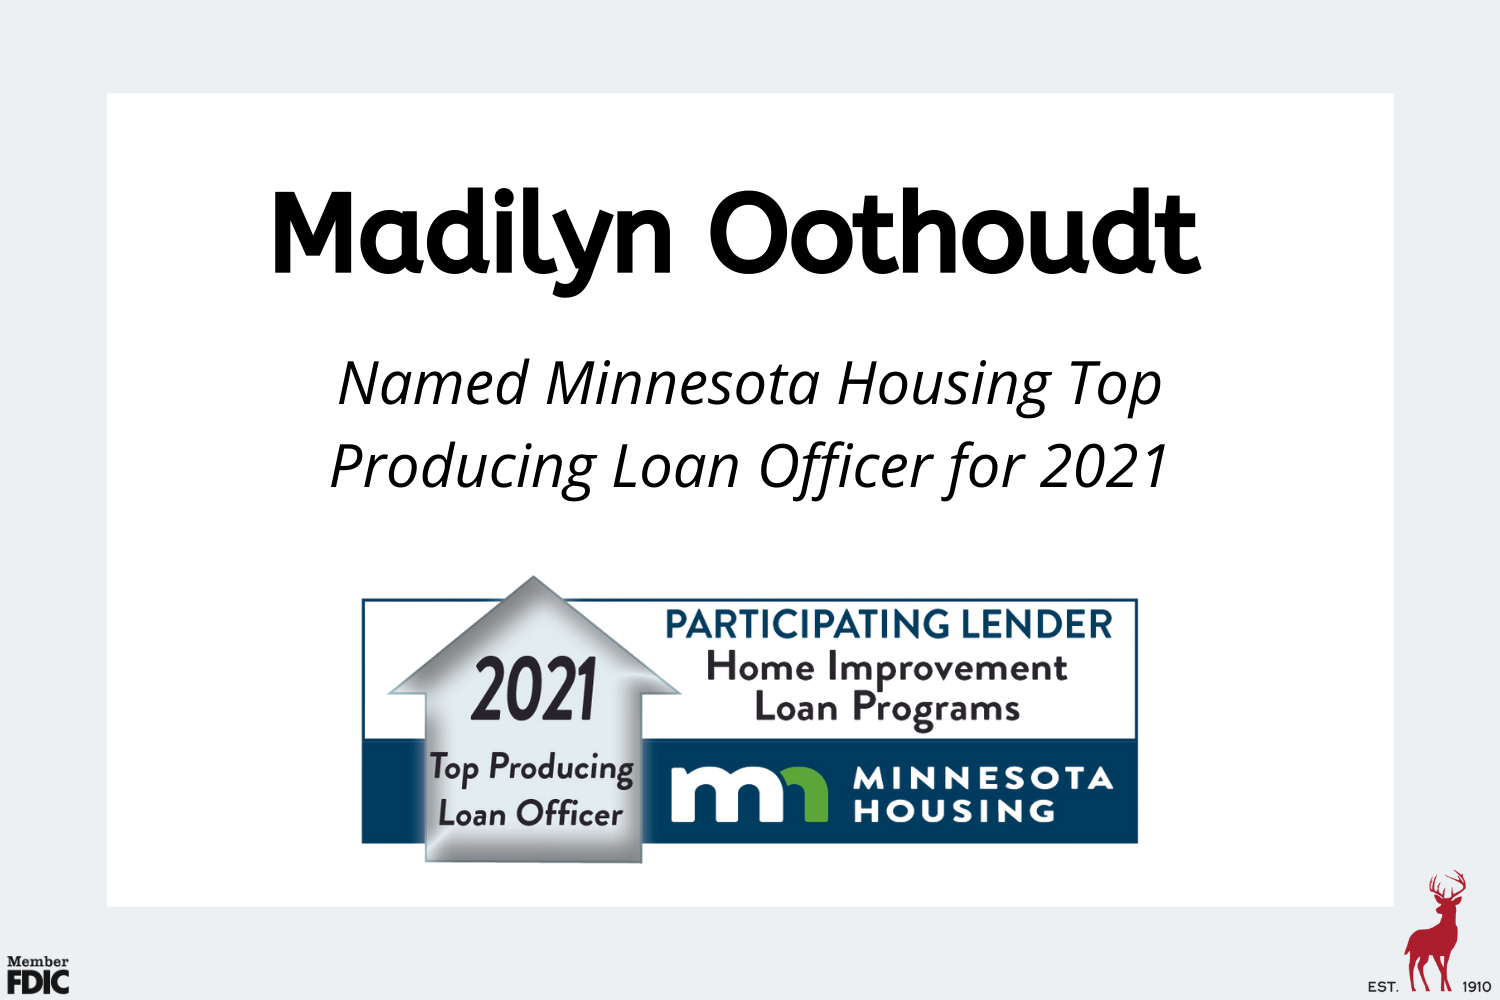 Madilyn Oothoudt Named Top Producing Loan Officer